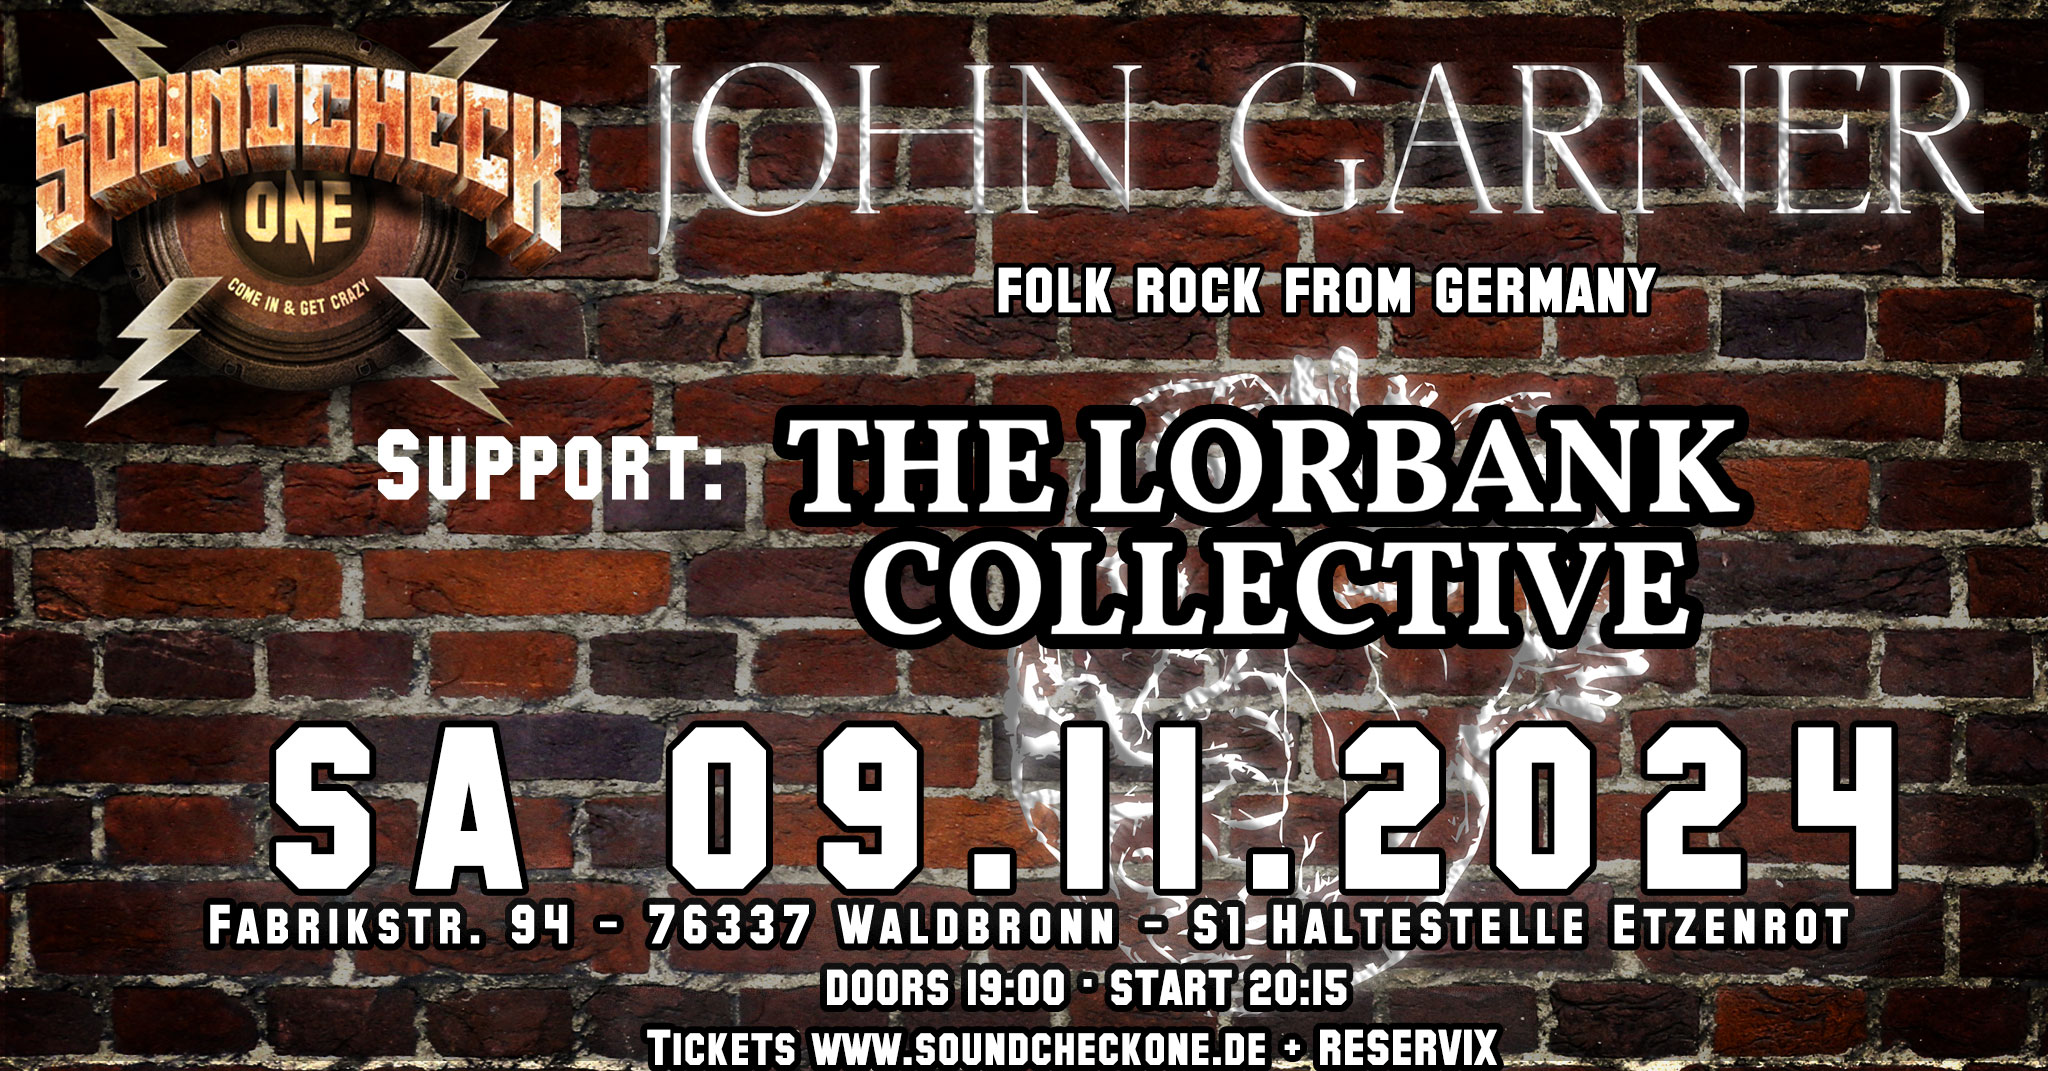 John Garner + The Lorbank Collective